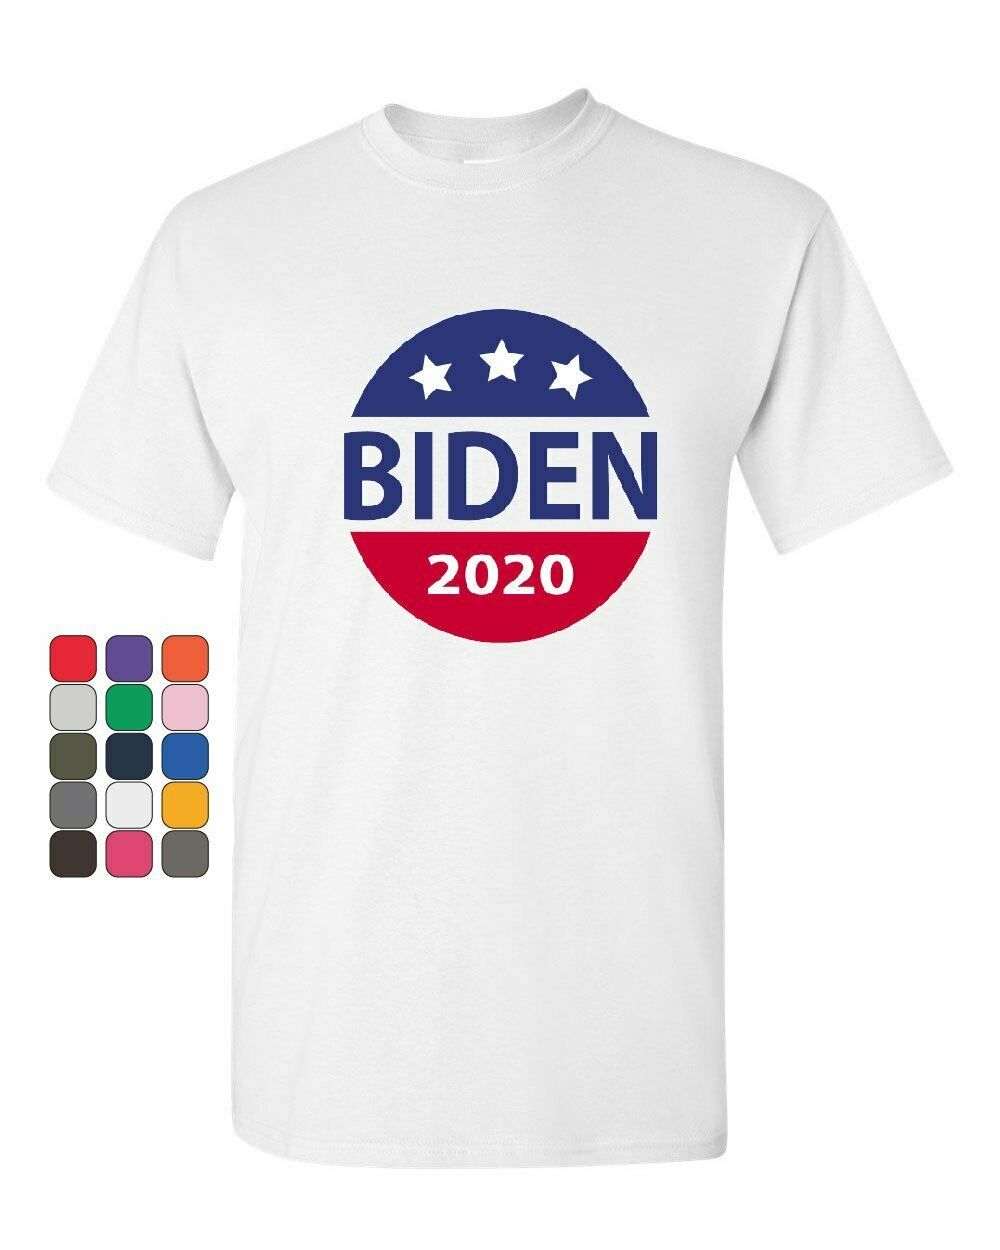 Joe Biden for President 2020 T-Shirt Vote Democrat 2020 Election Mens Tee Shirt